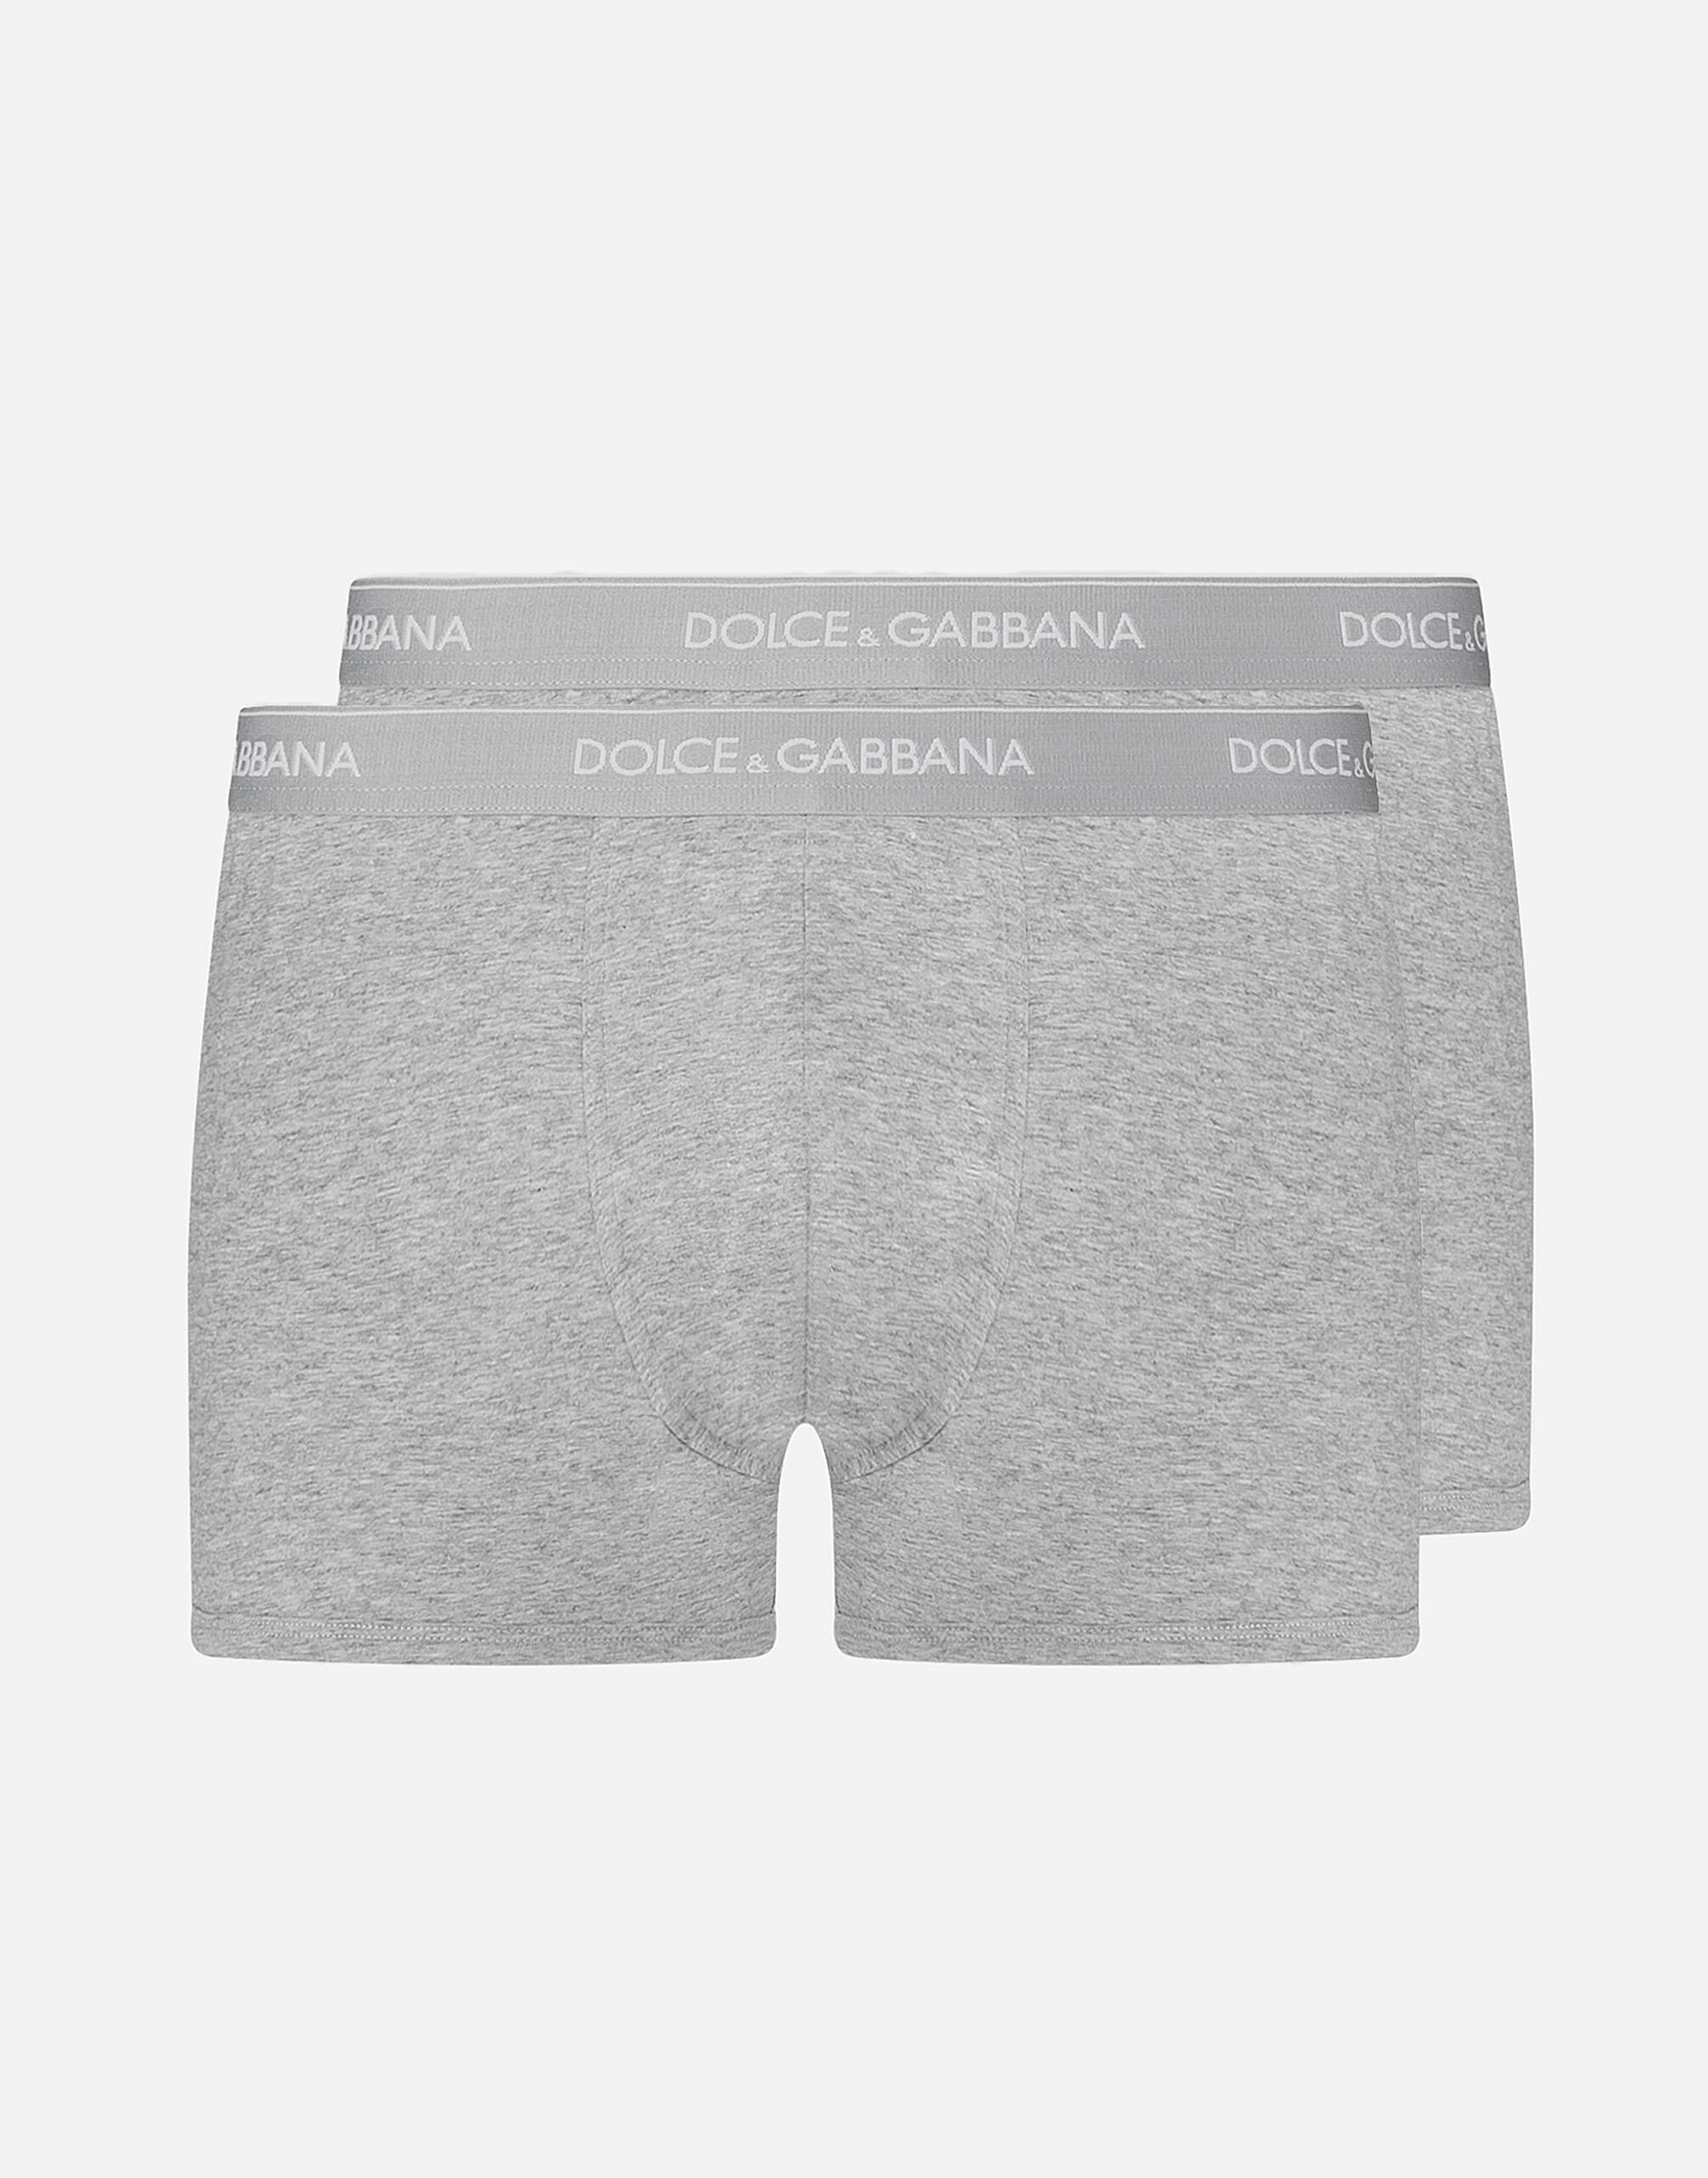 Dolce & Gabbana N60033 O0022, Underwear - Briefs, Fashion clothing online  store